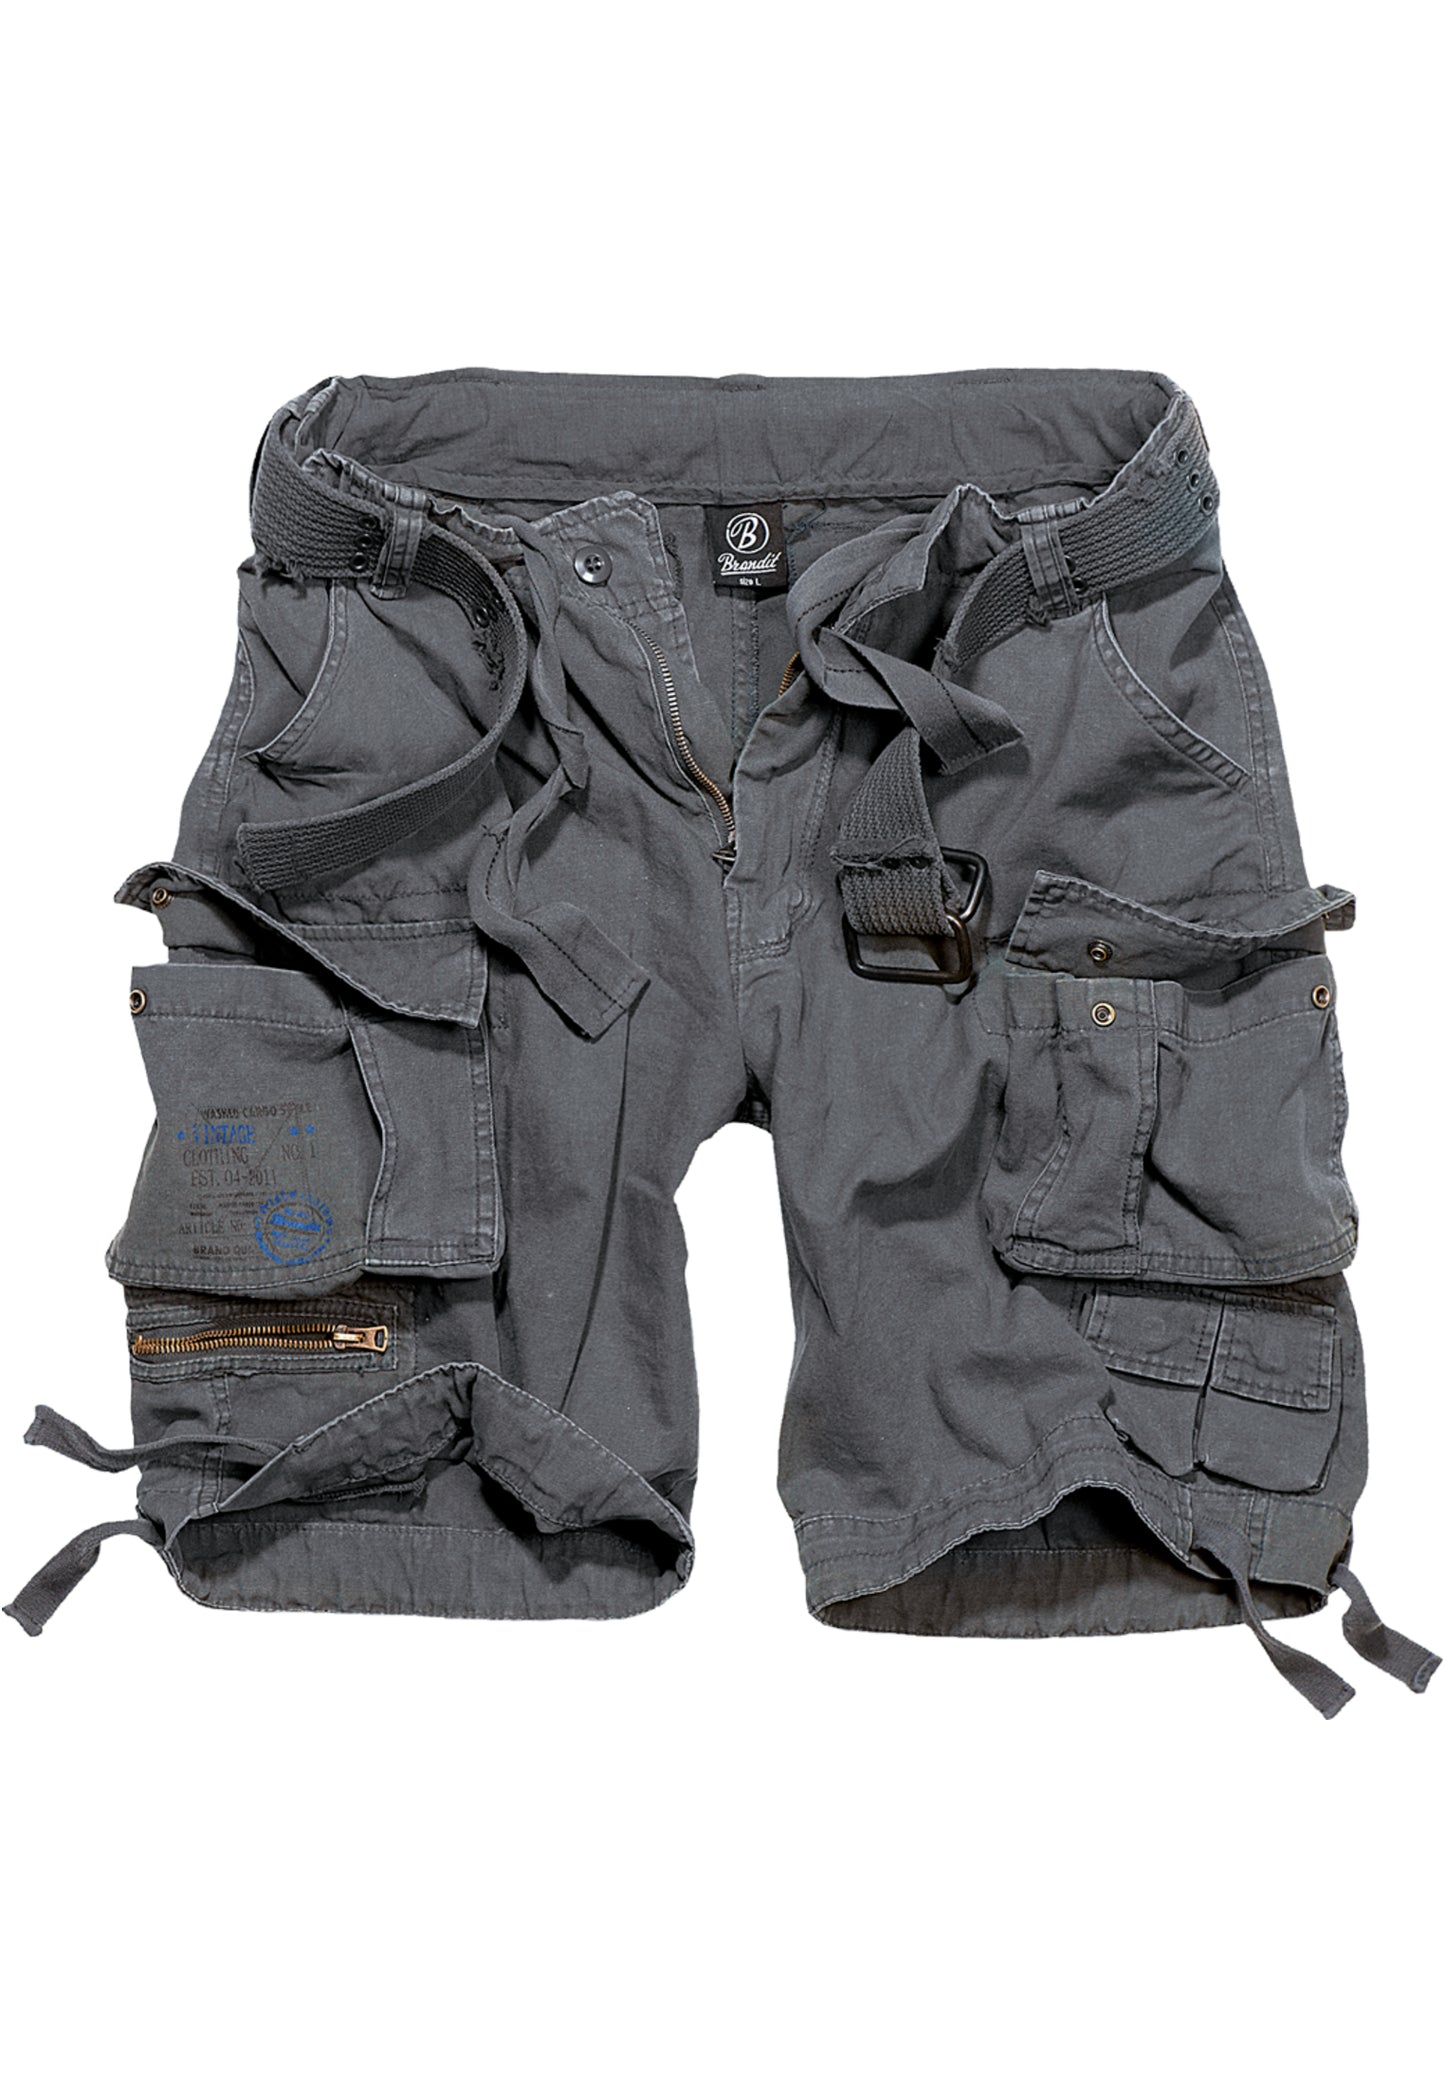 Brandit Savage Vintage Cargo Shorts in Charcoal